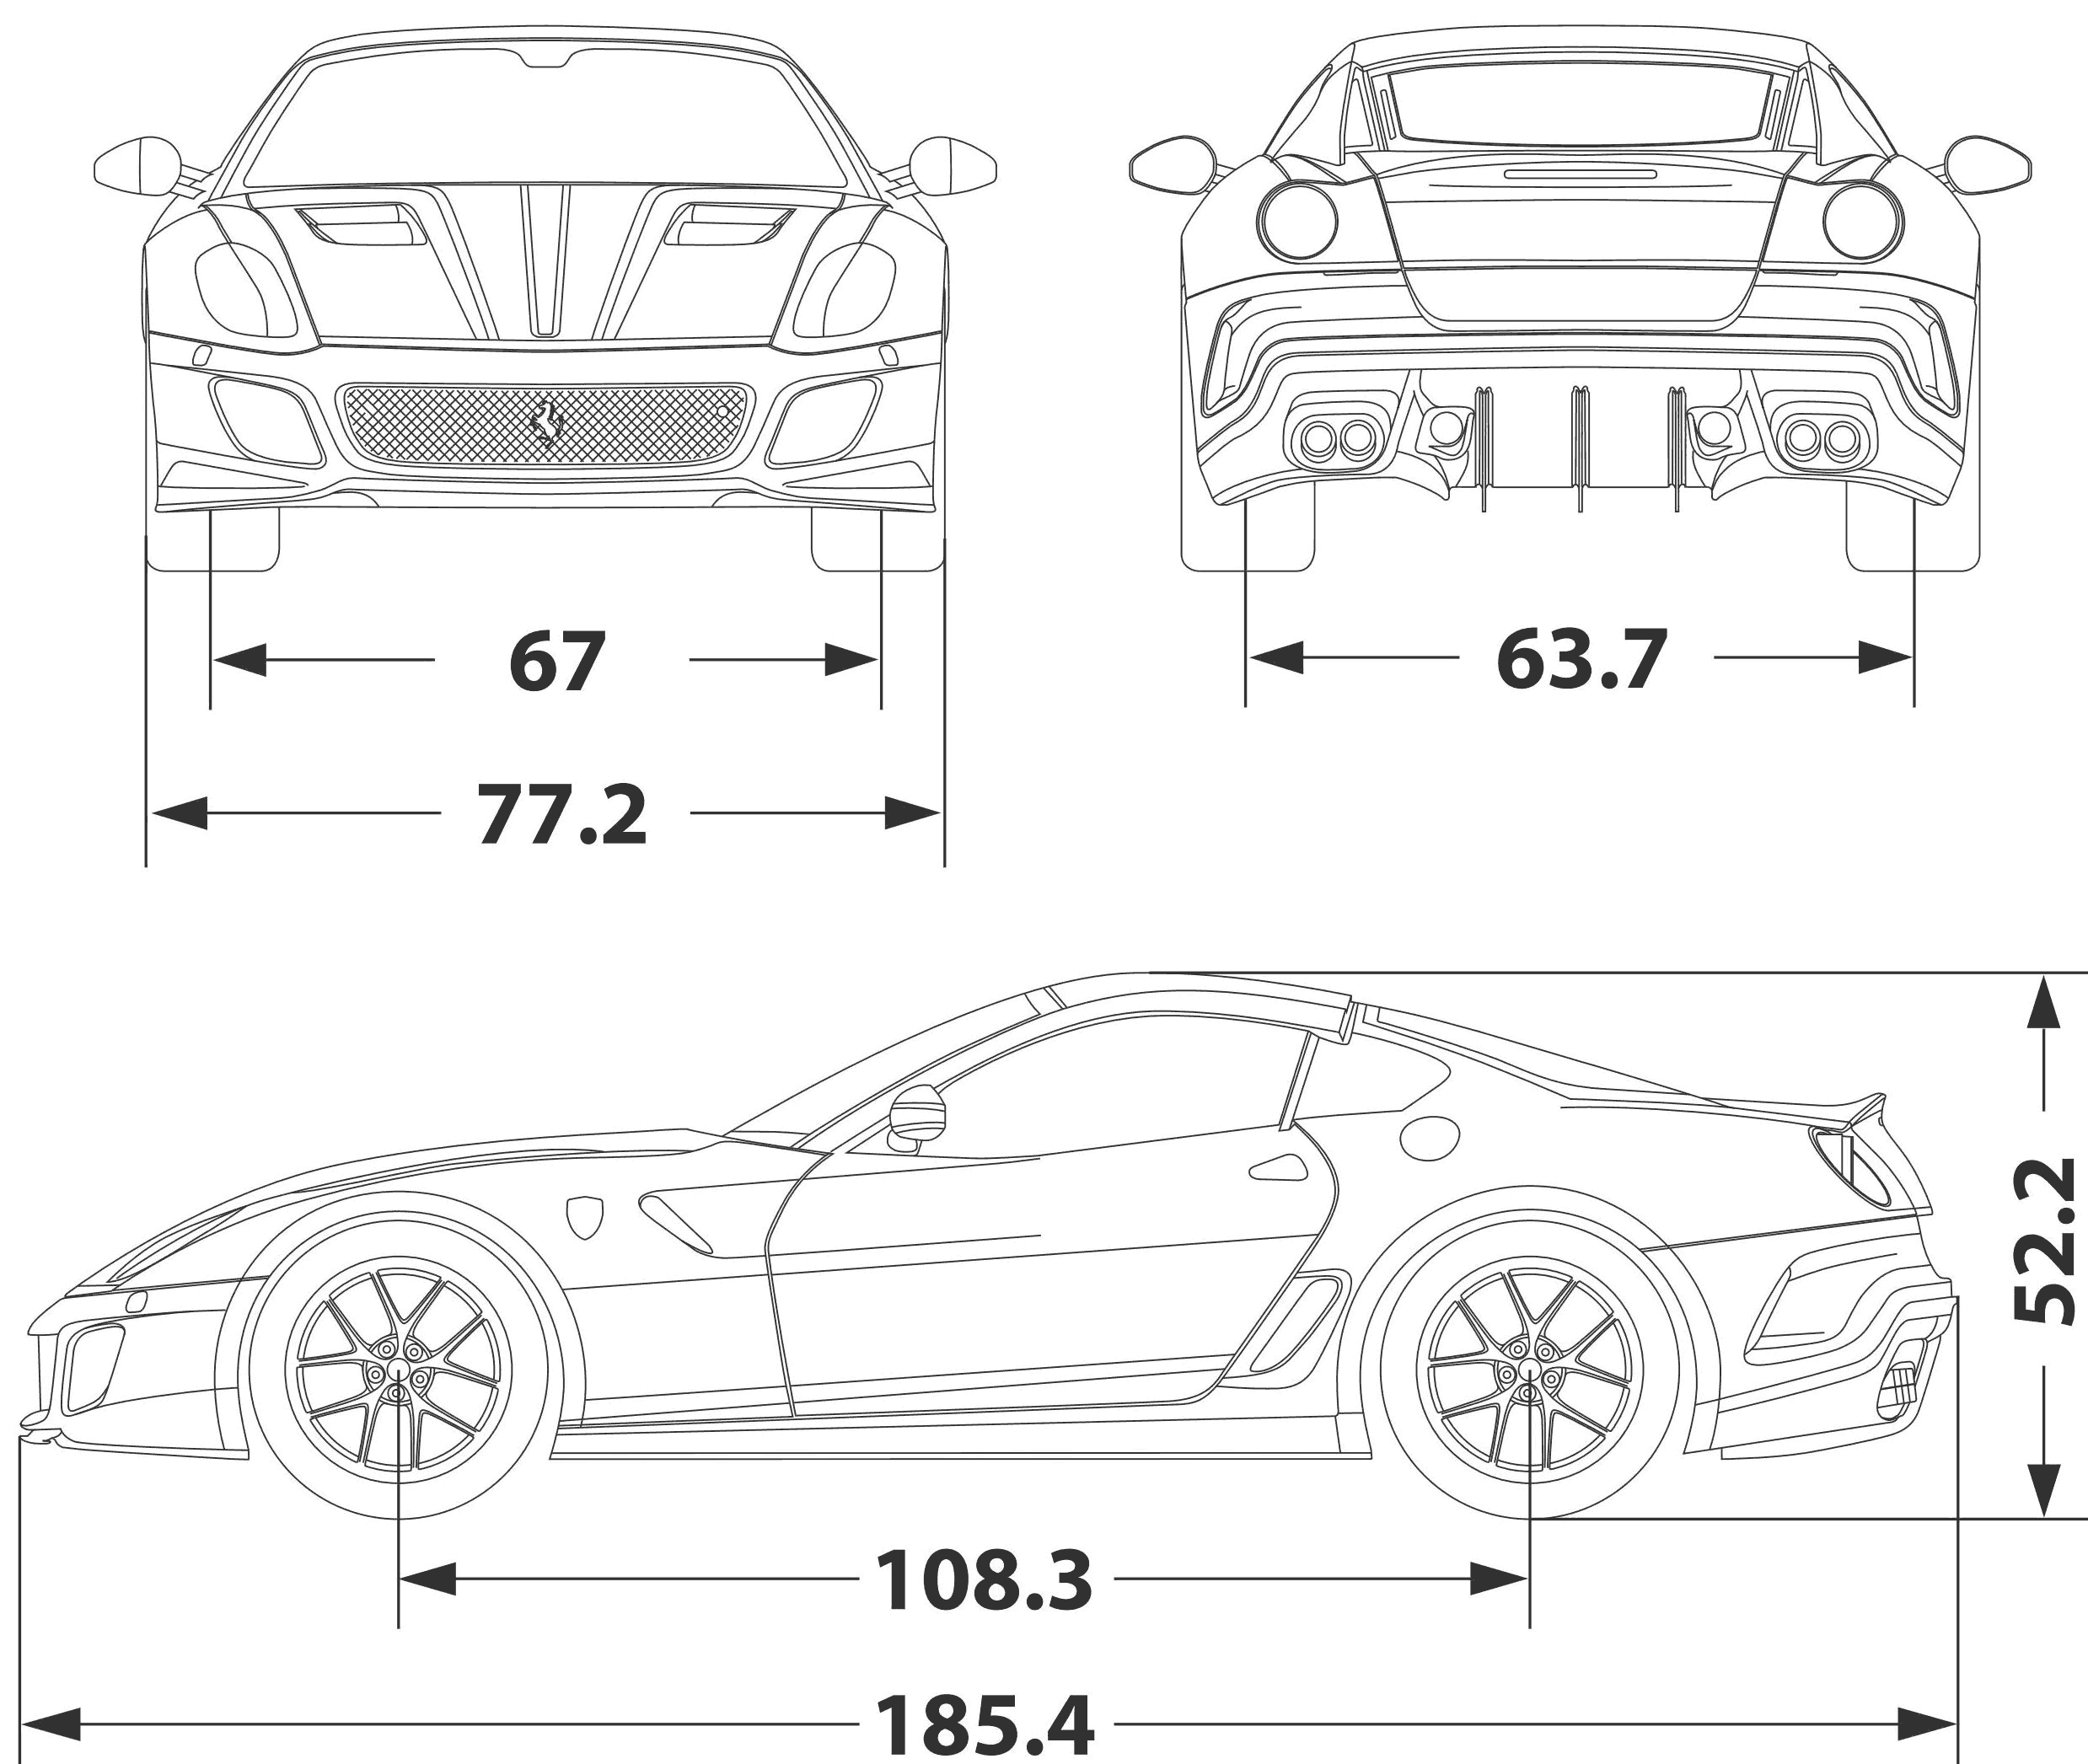 Ferrari 599 GTO blueprint